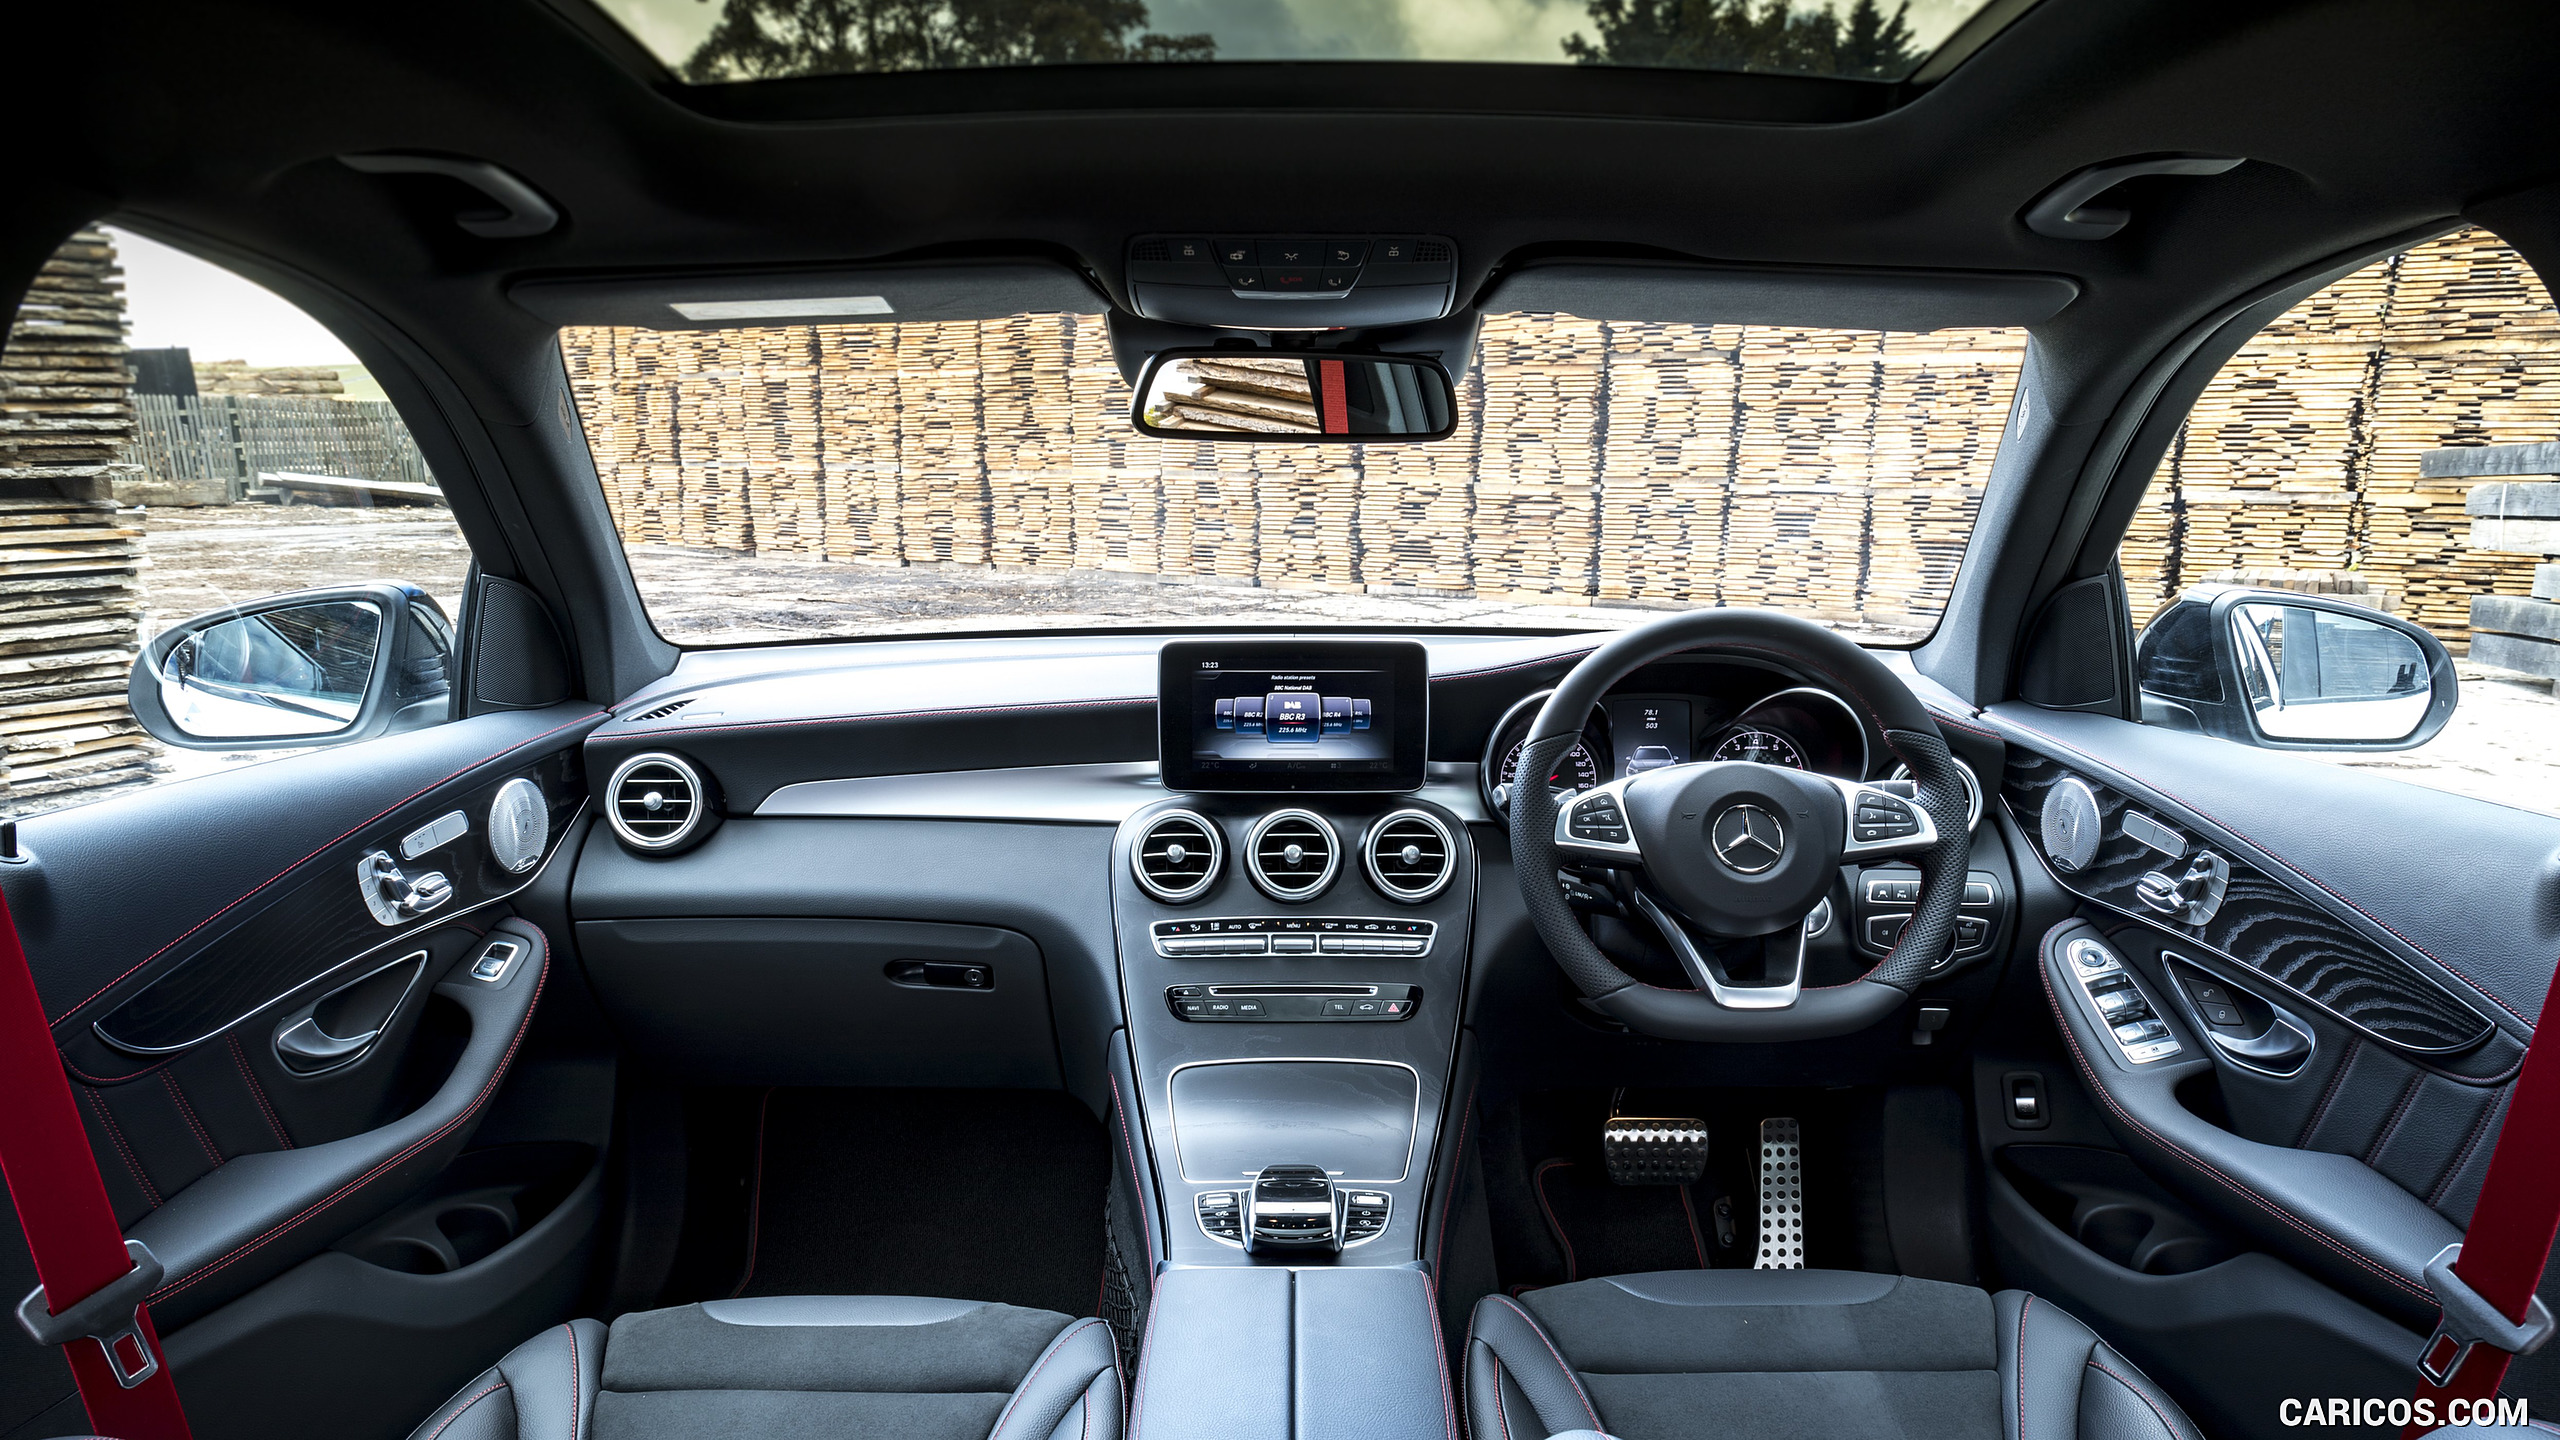 2017 Mercedes-AMG GLC 43 4MATIC (UK-Spec) - Interior, Cockpit, #71 of 108